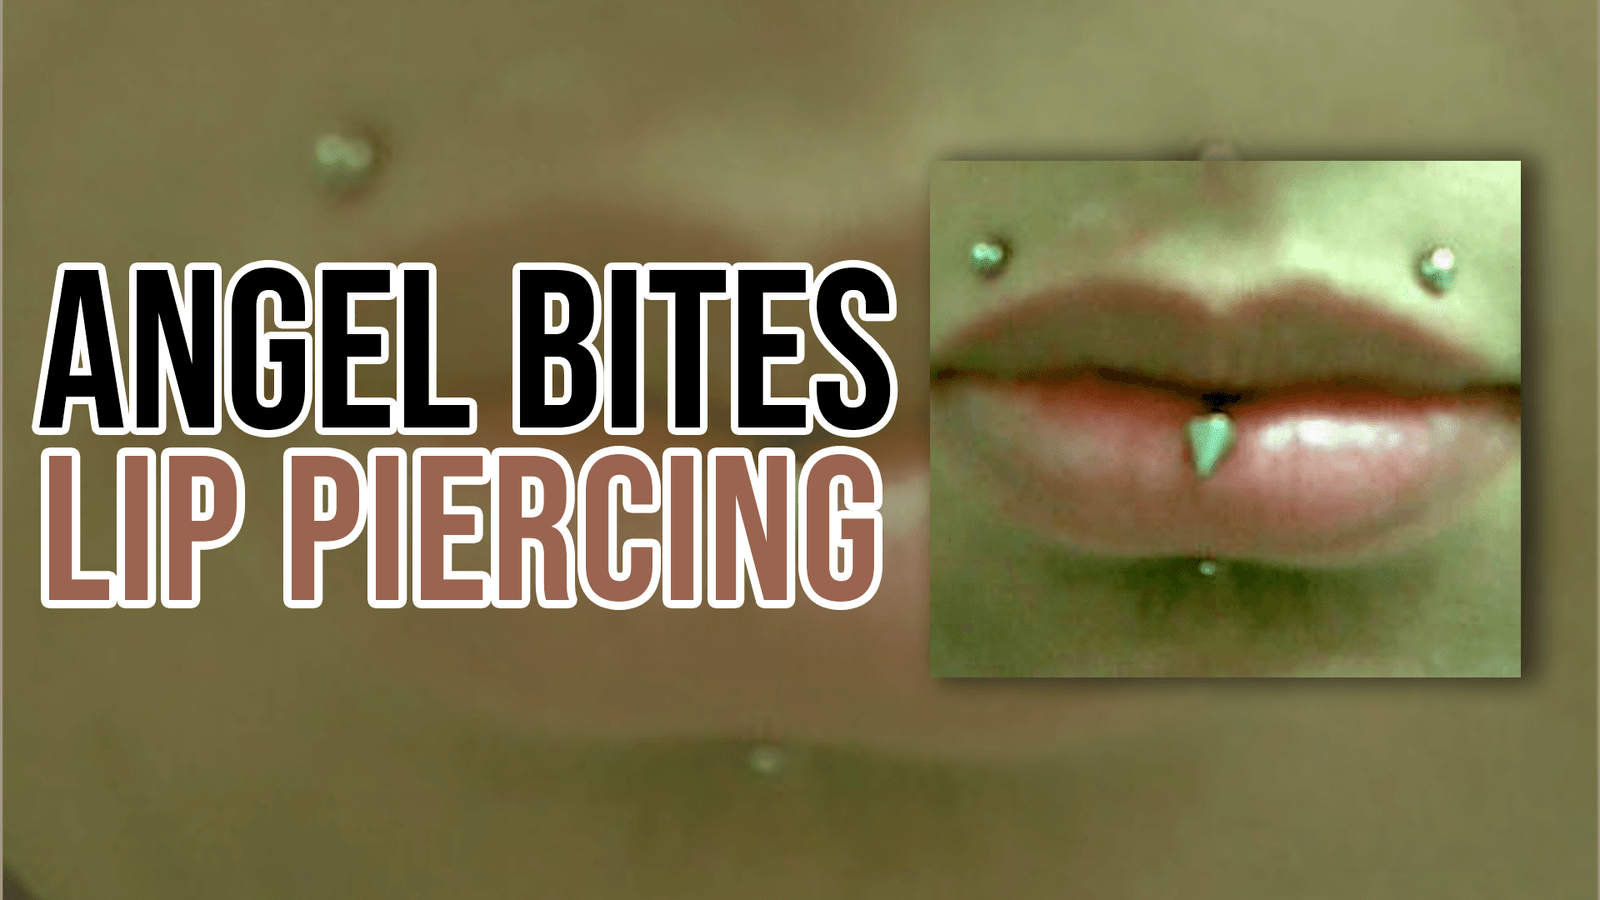 Angel Bites Lip Piercing